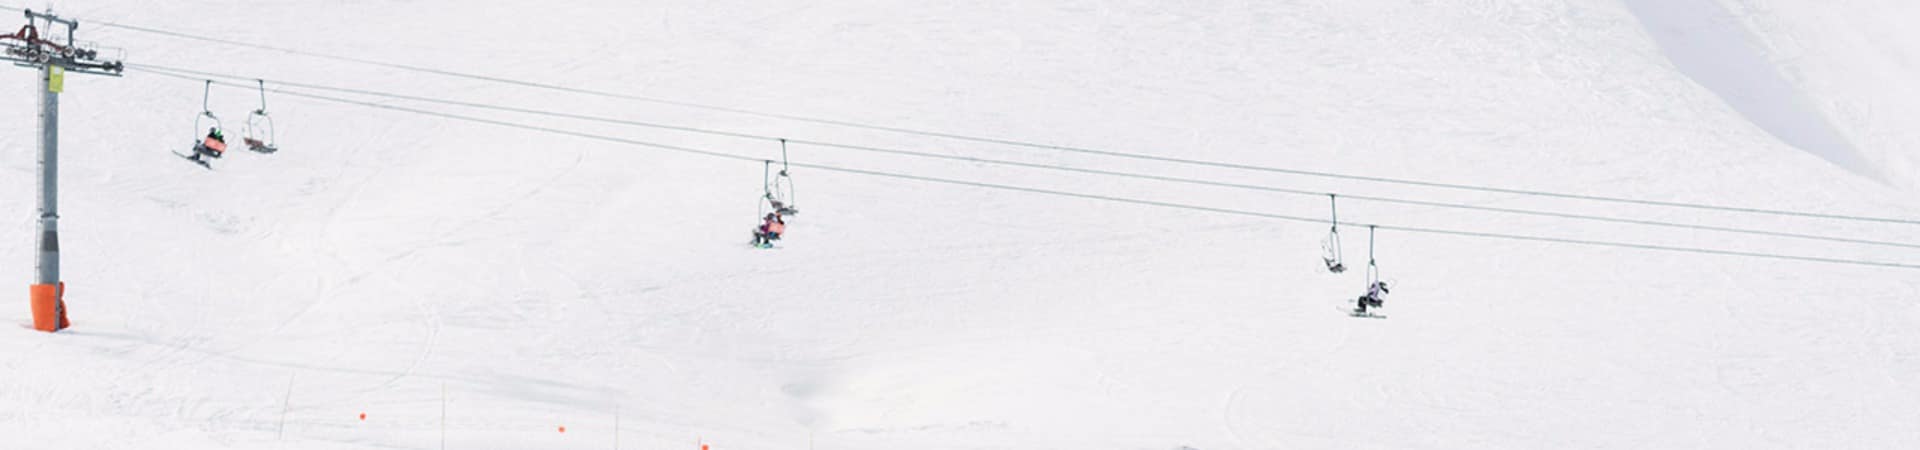 Chile valle nevado esqui criancas